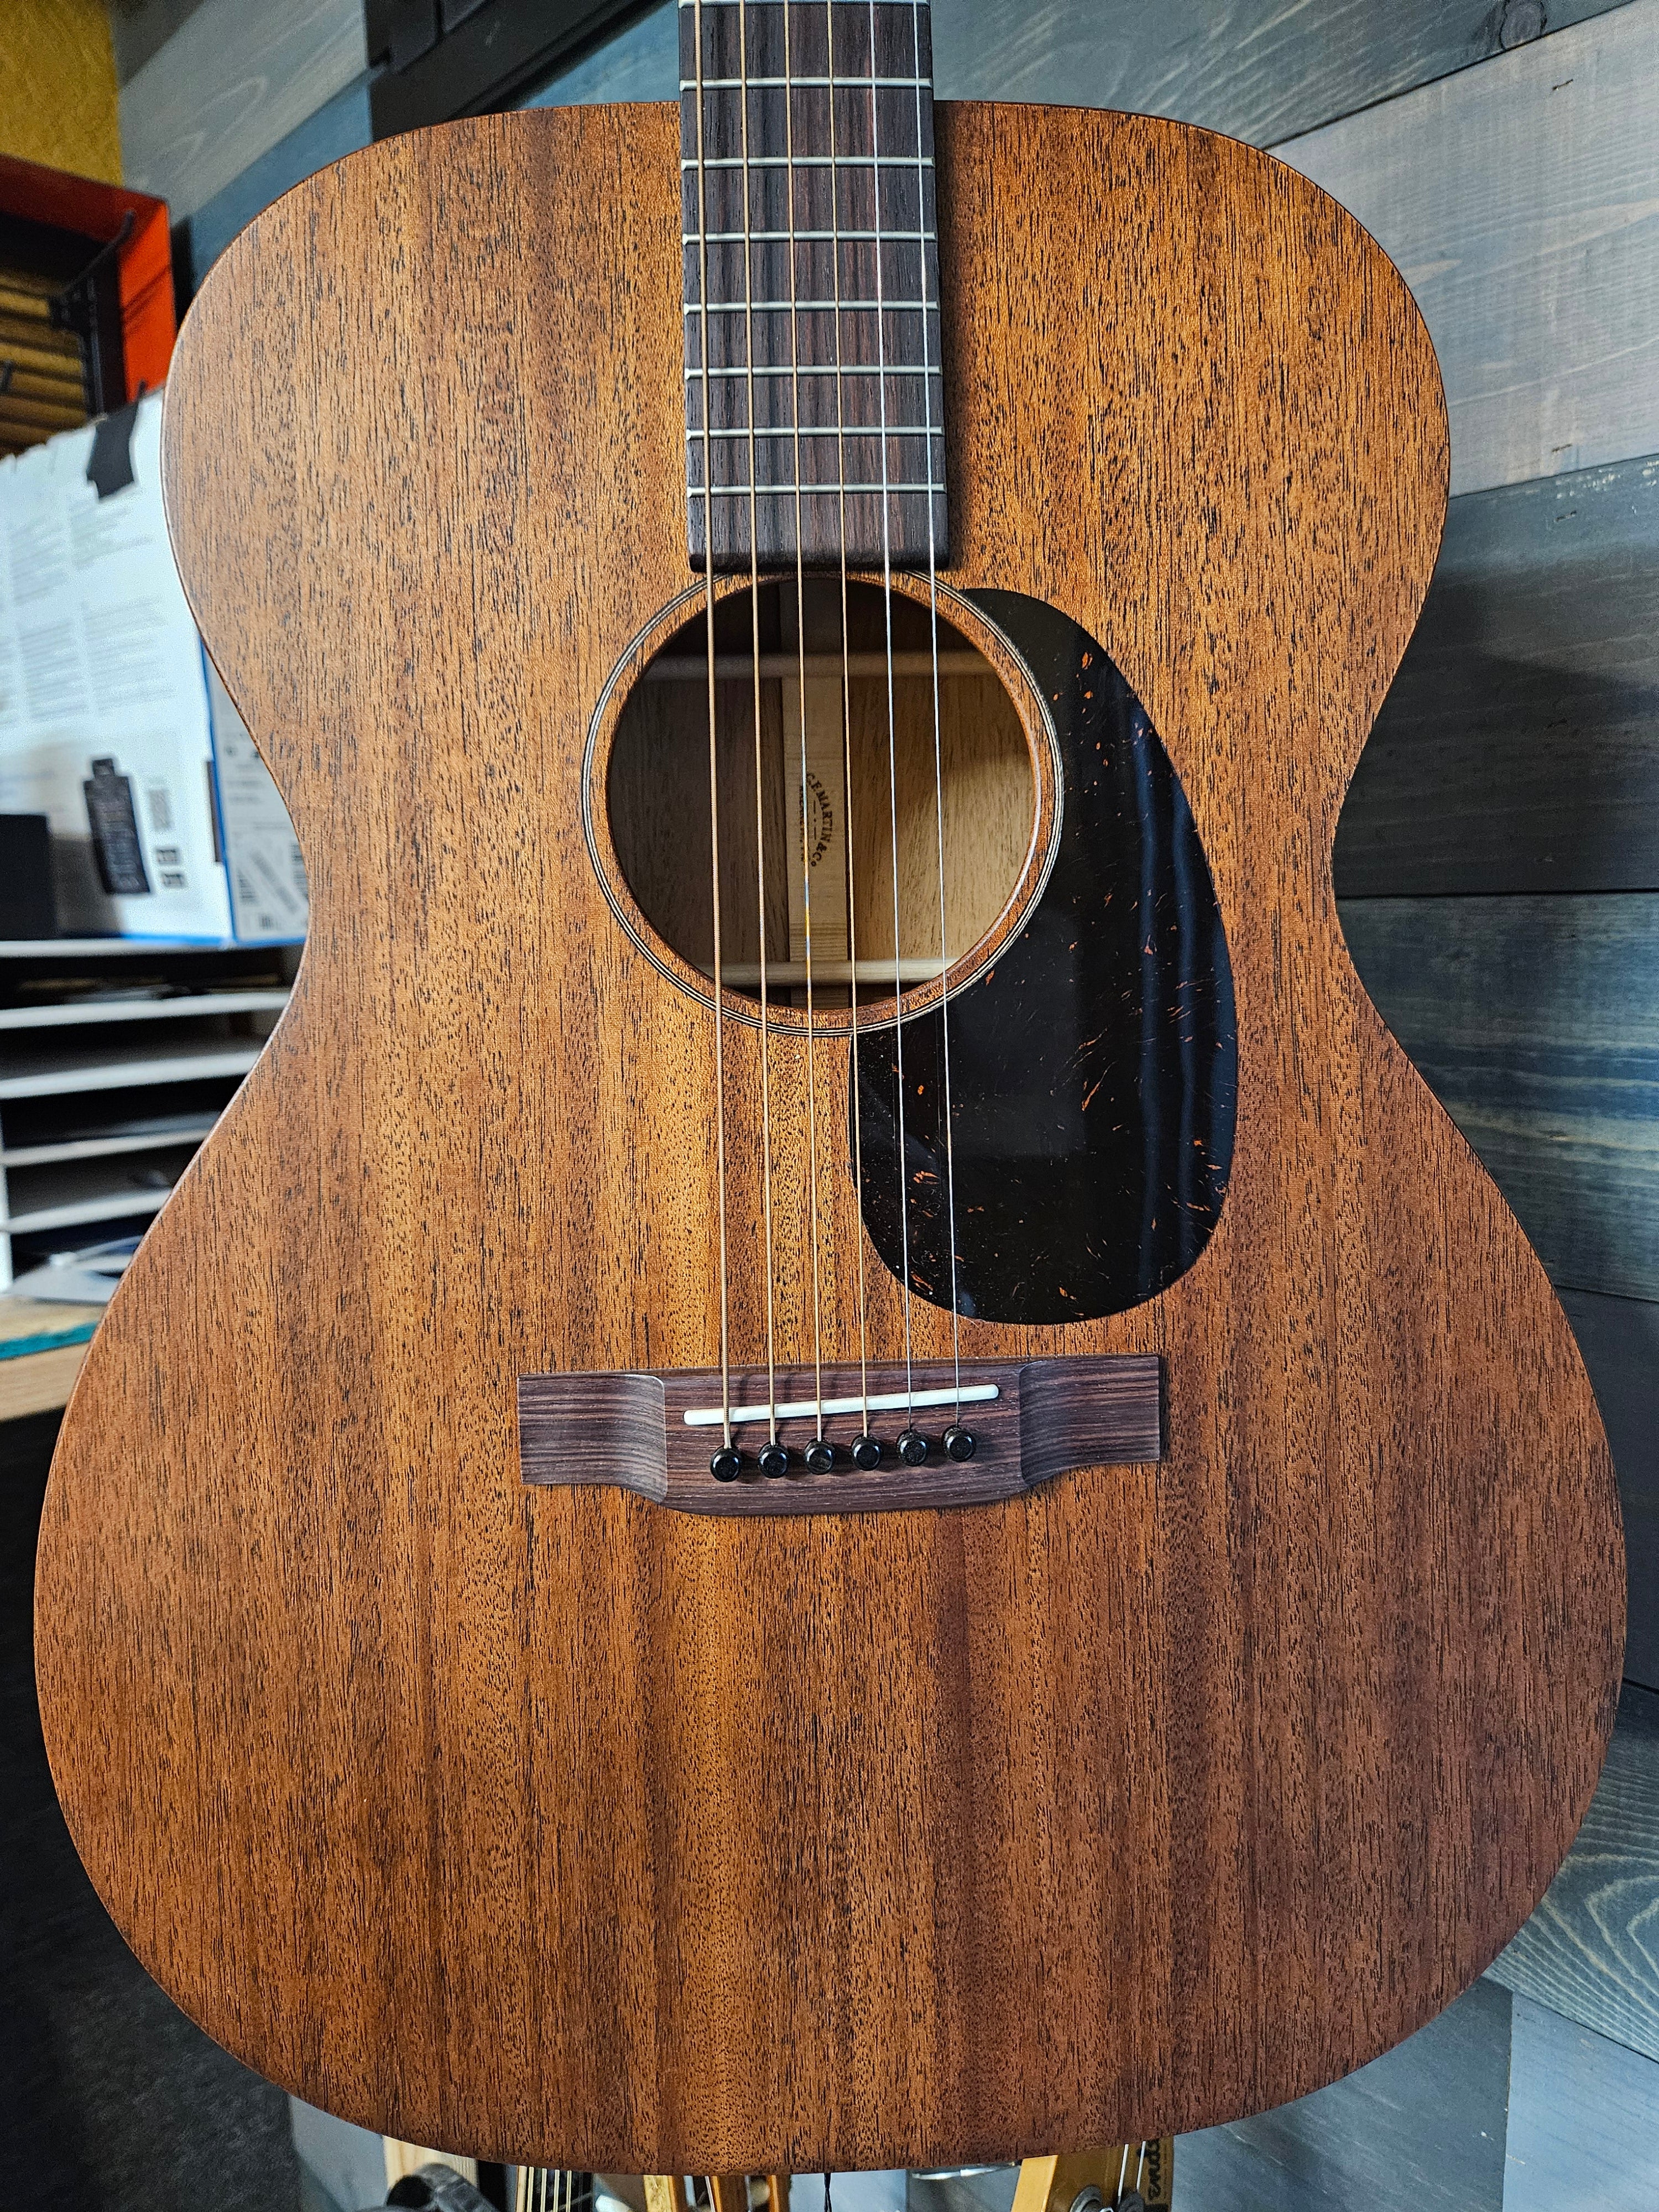 USED Martin 000-15M Acoustic Guitar - Mahogany